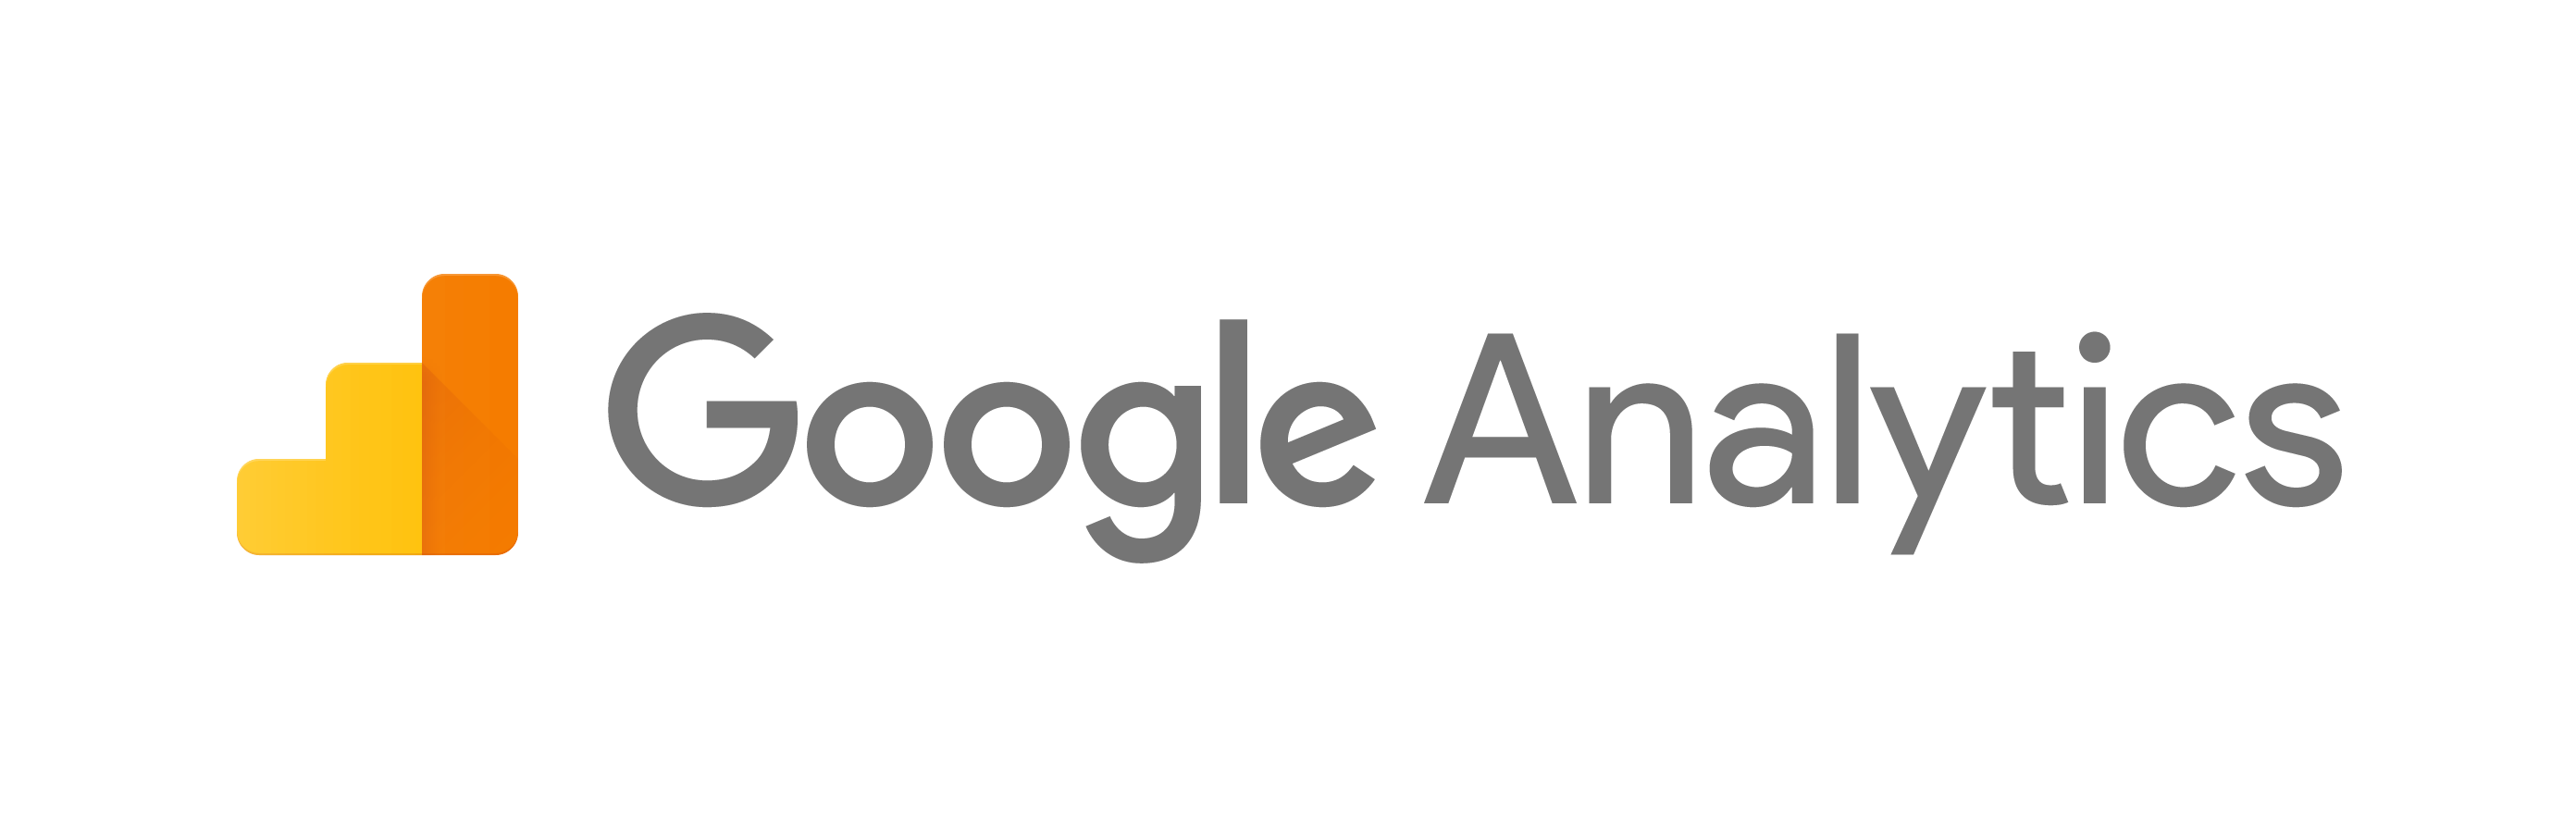 Google Analytics logo_lockup_analytics_icon_horizontal_black_2x